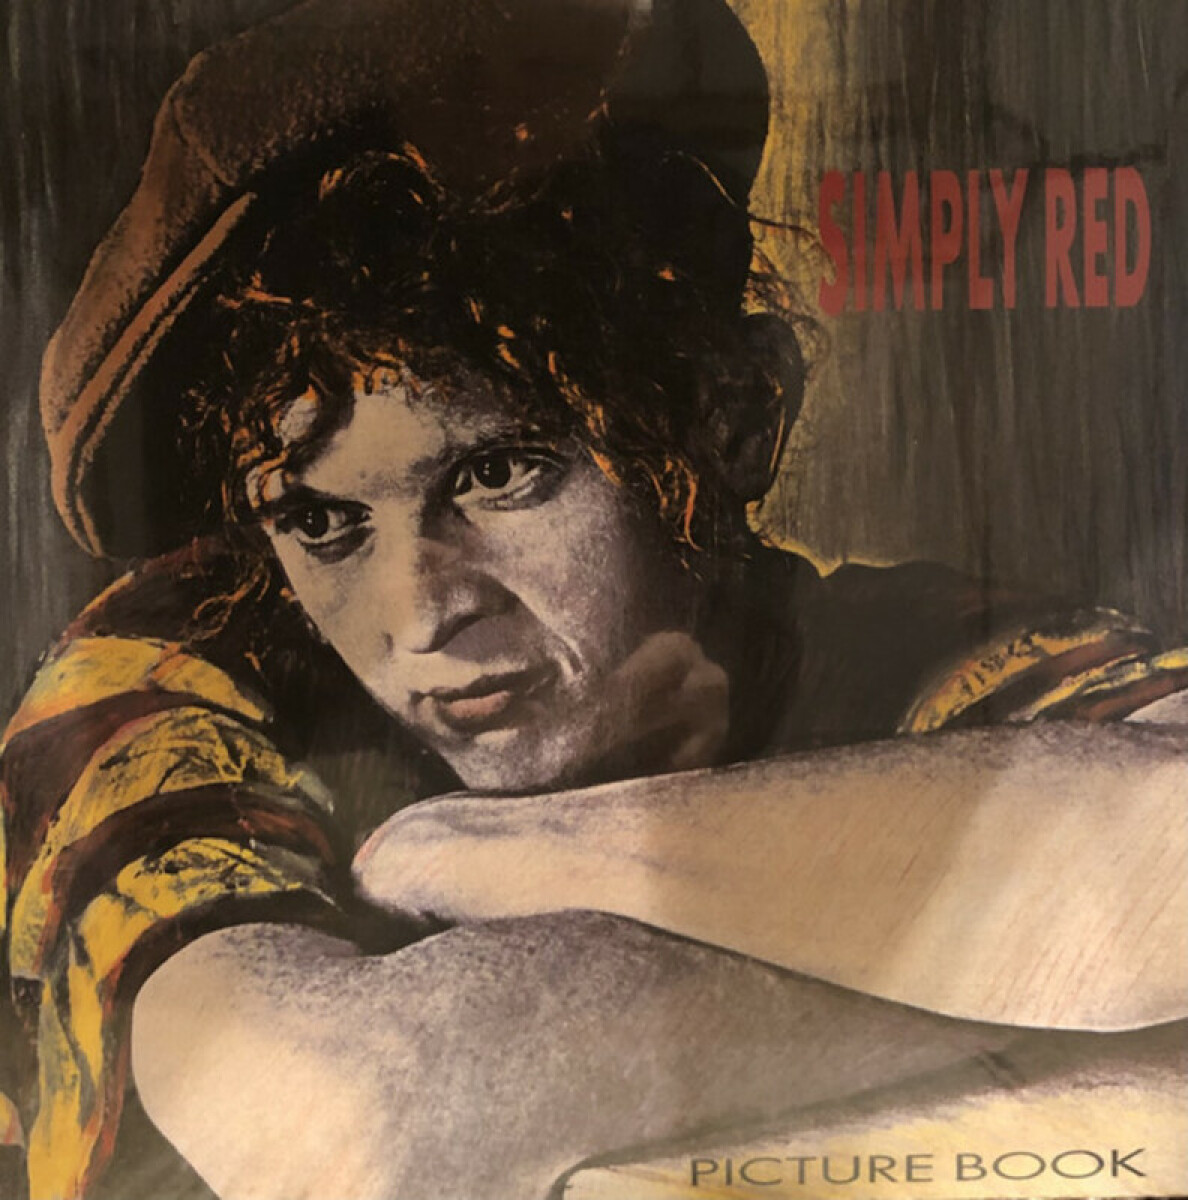 Simply Red - Picture Book - Vinilo 